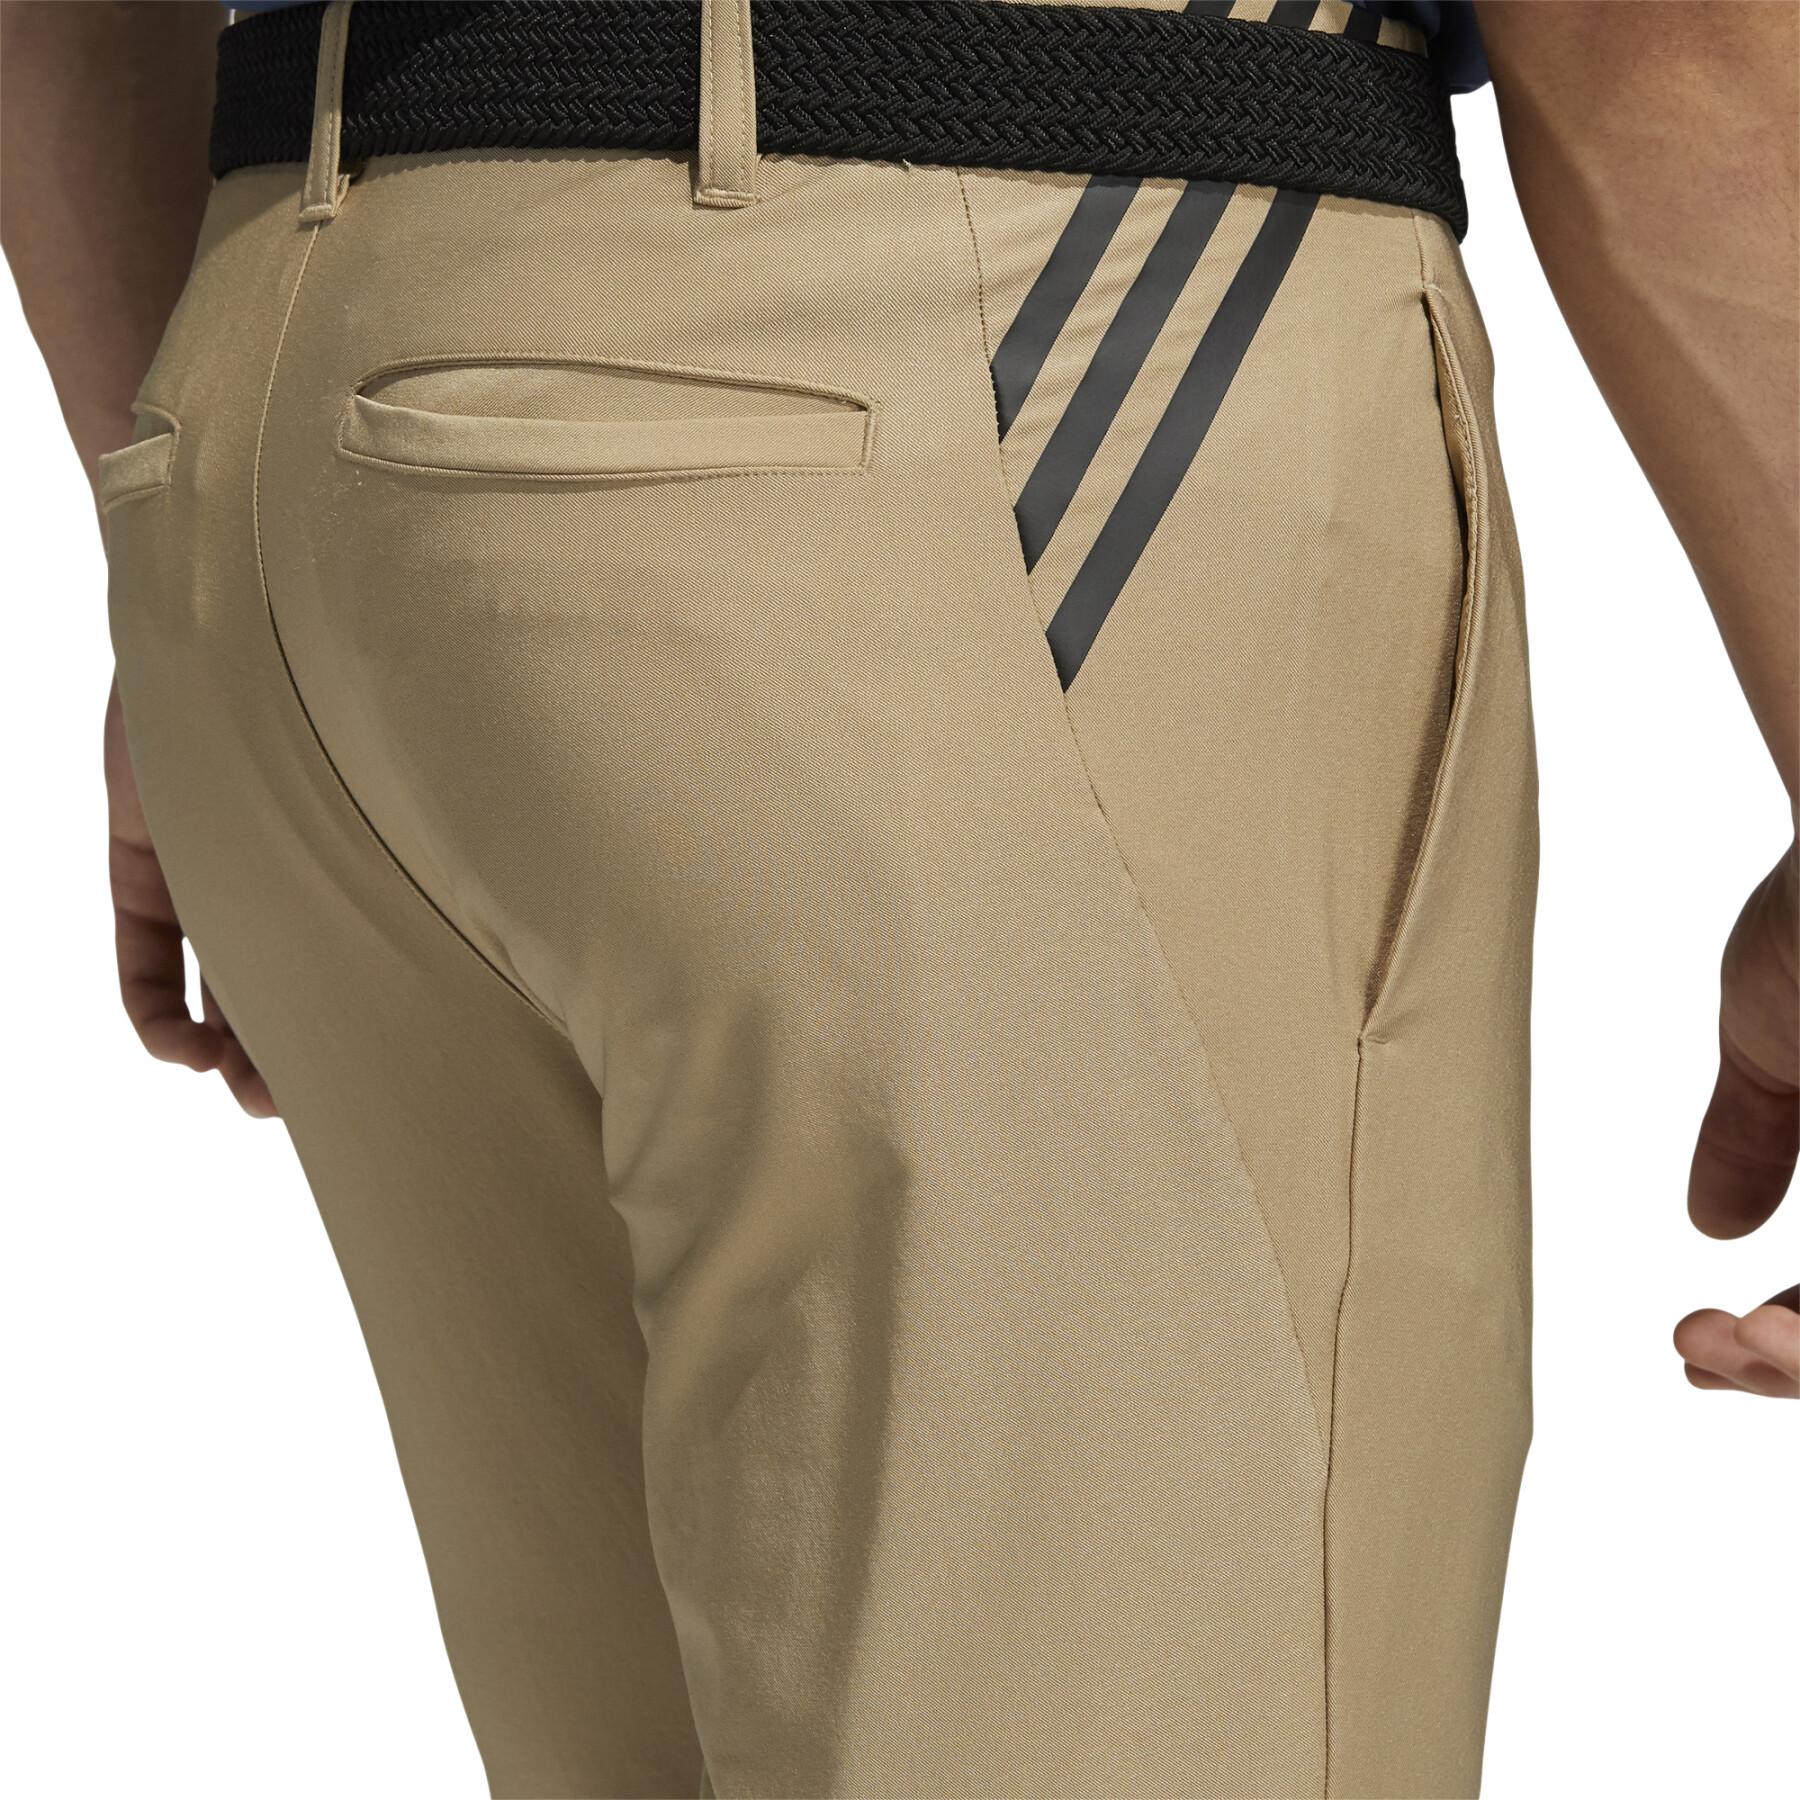 Pants adidas Ultimate365 3-Stripes